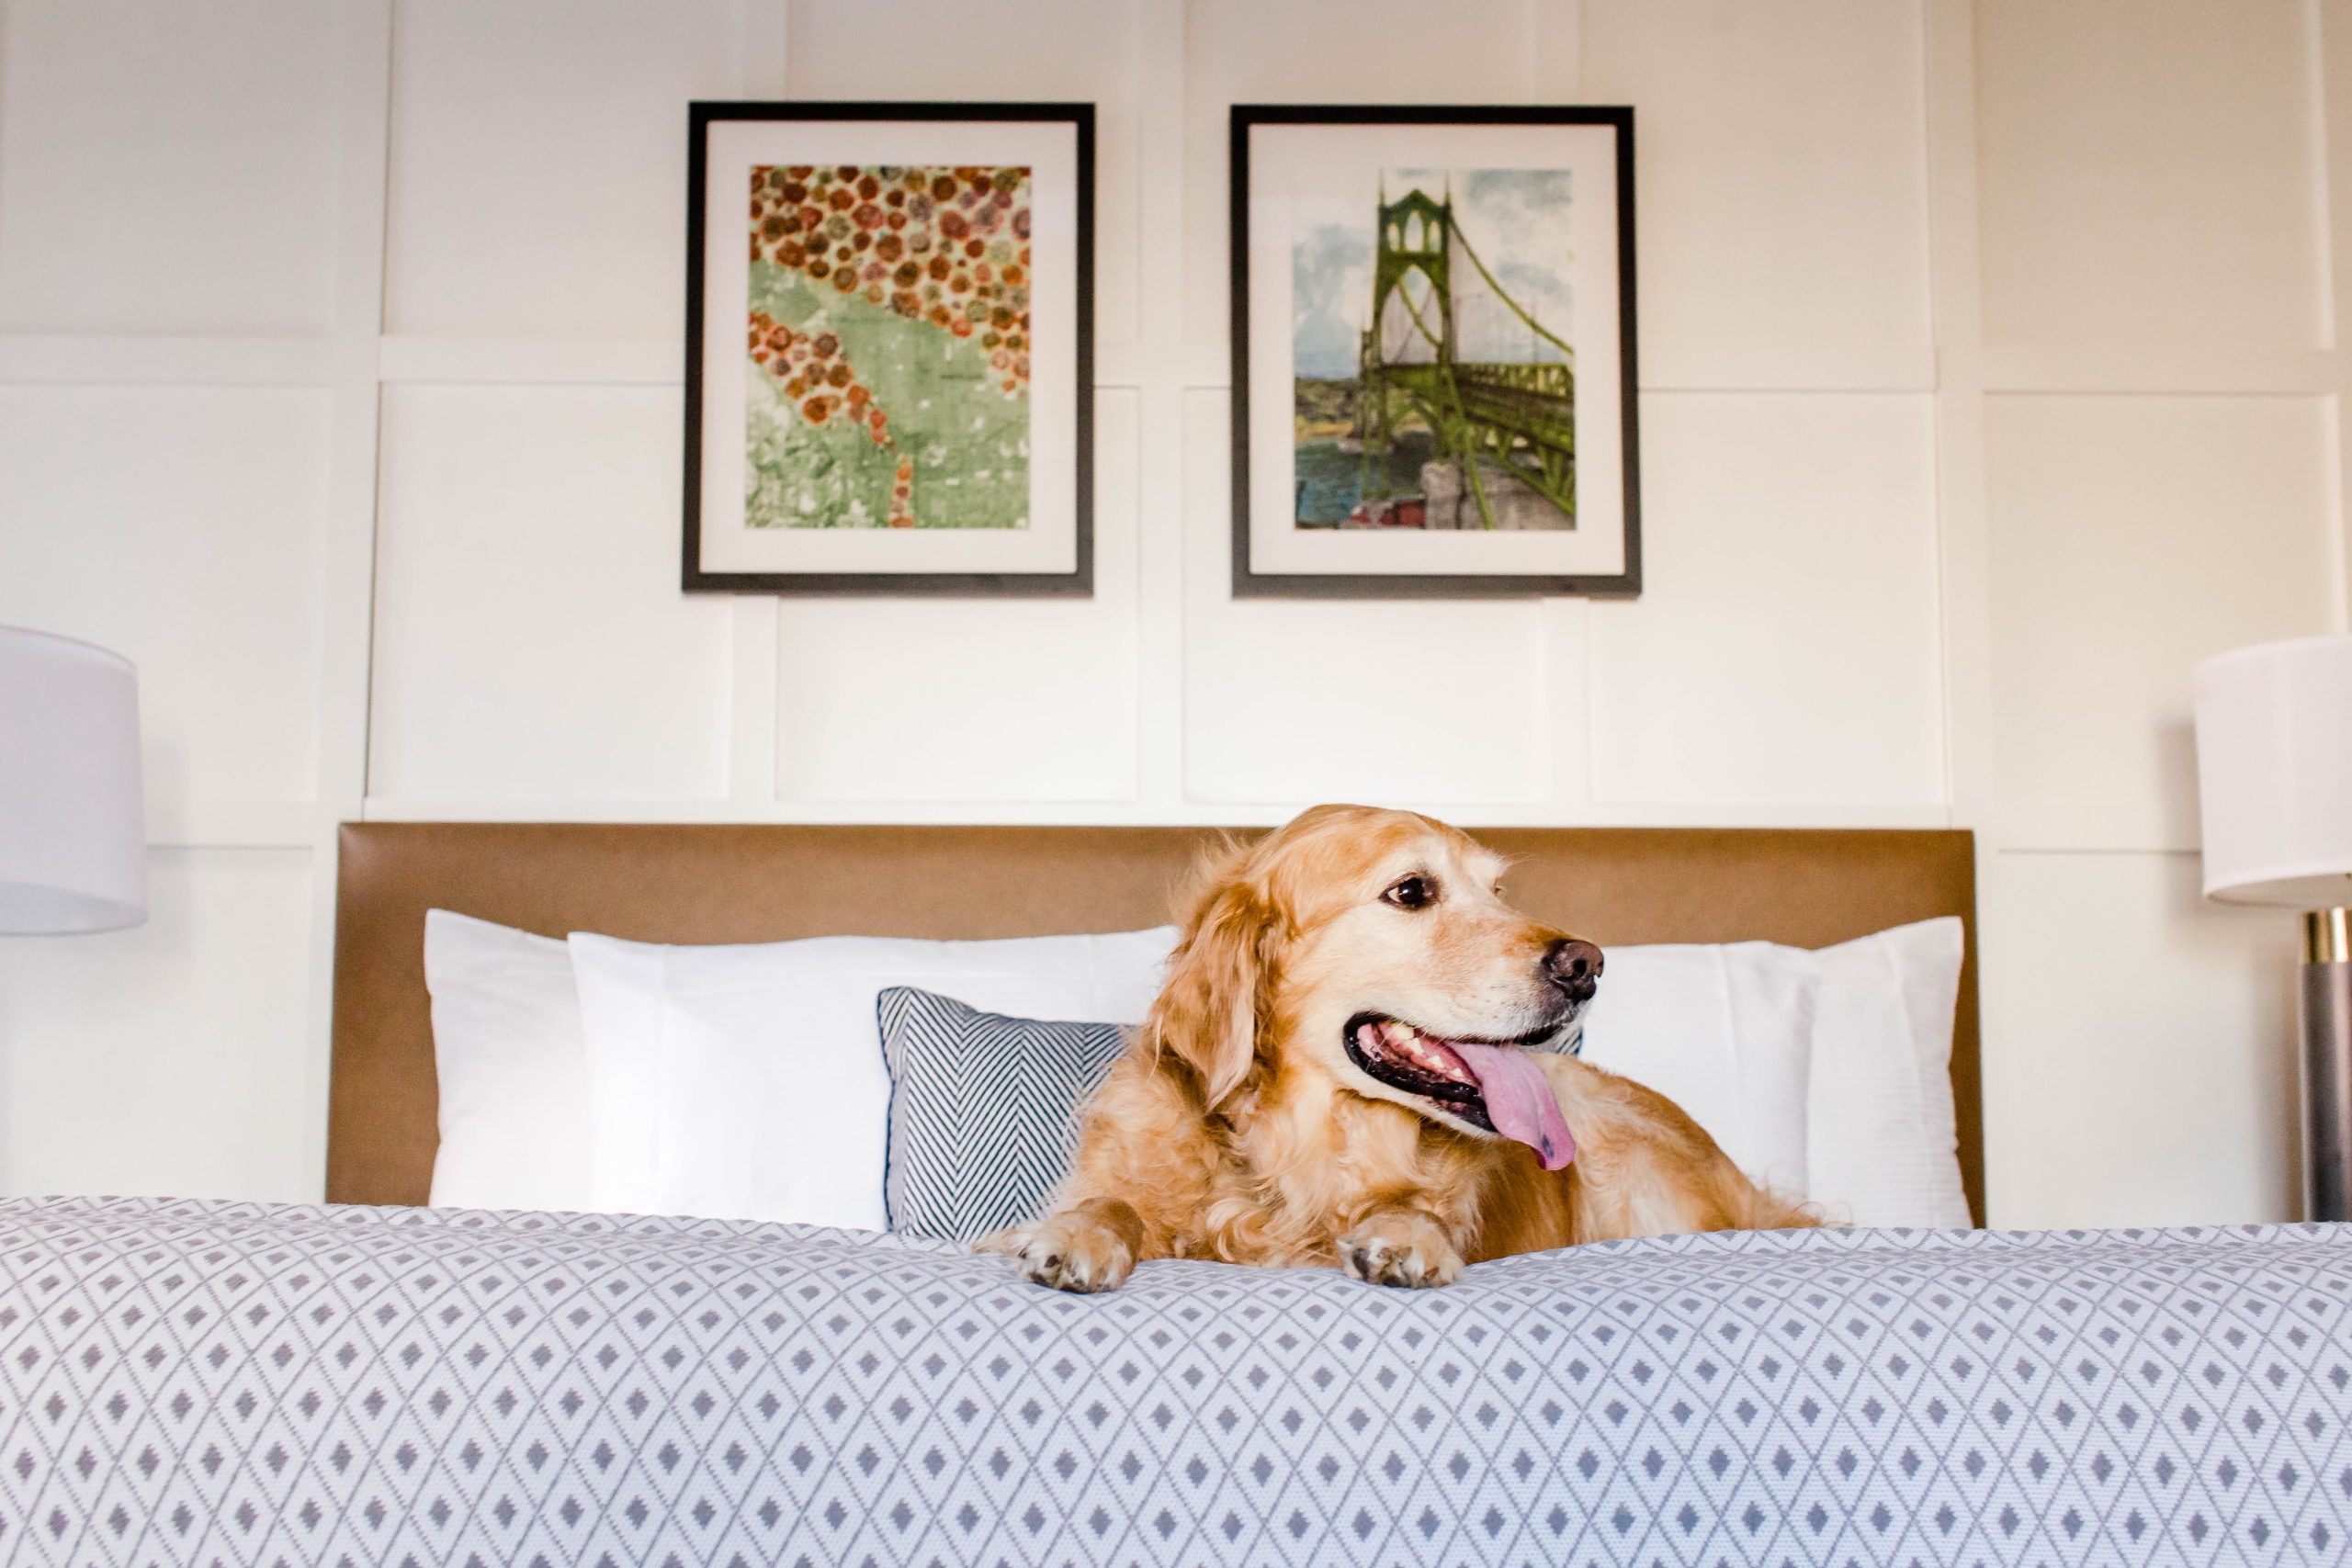 A golden dog on a hotel bed at the Heathman Hotel in Portland, Oregon.